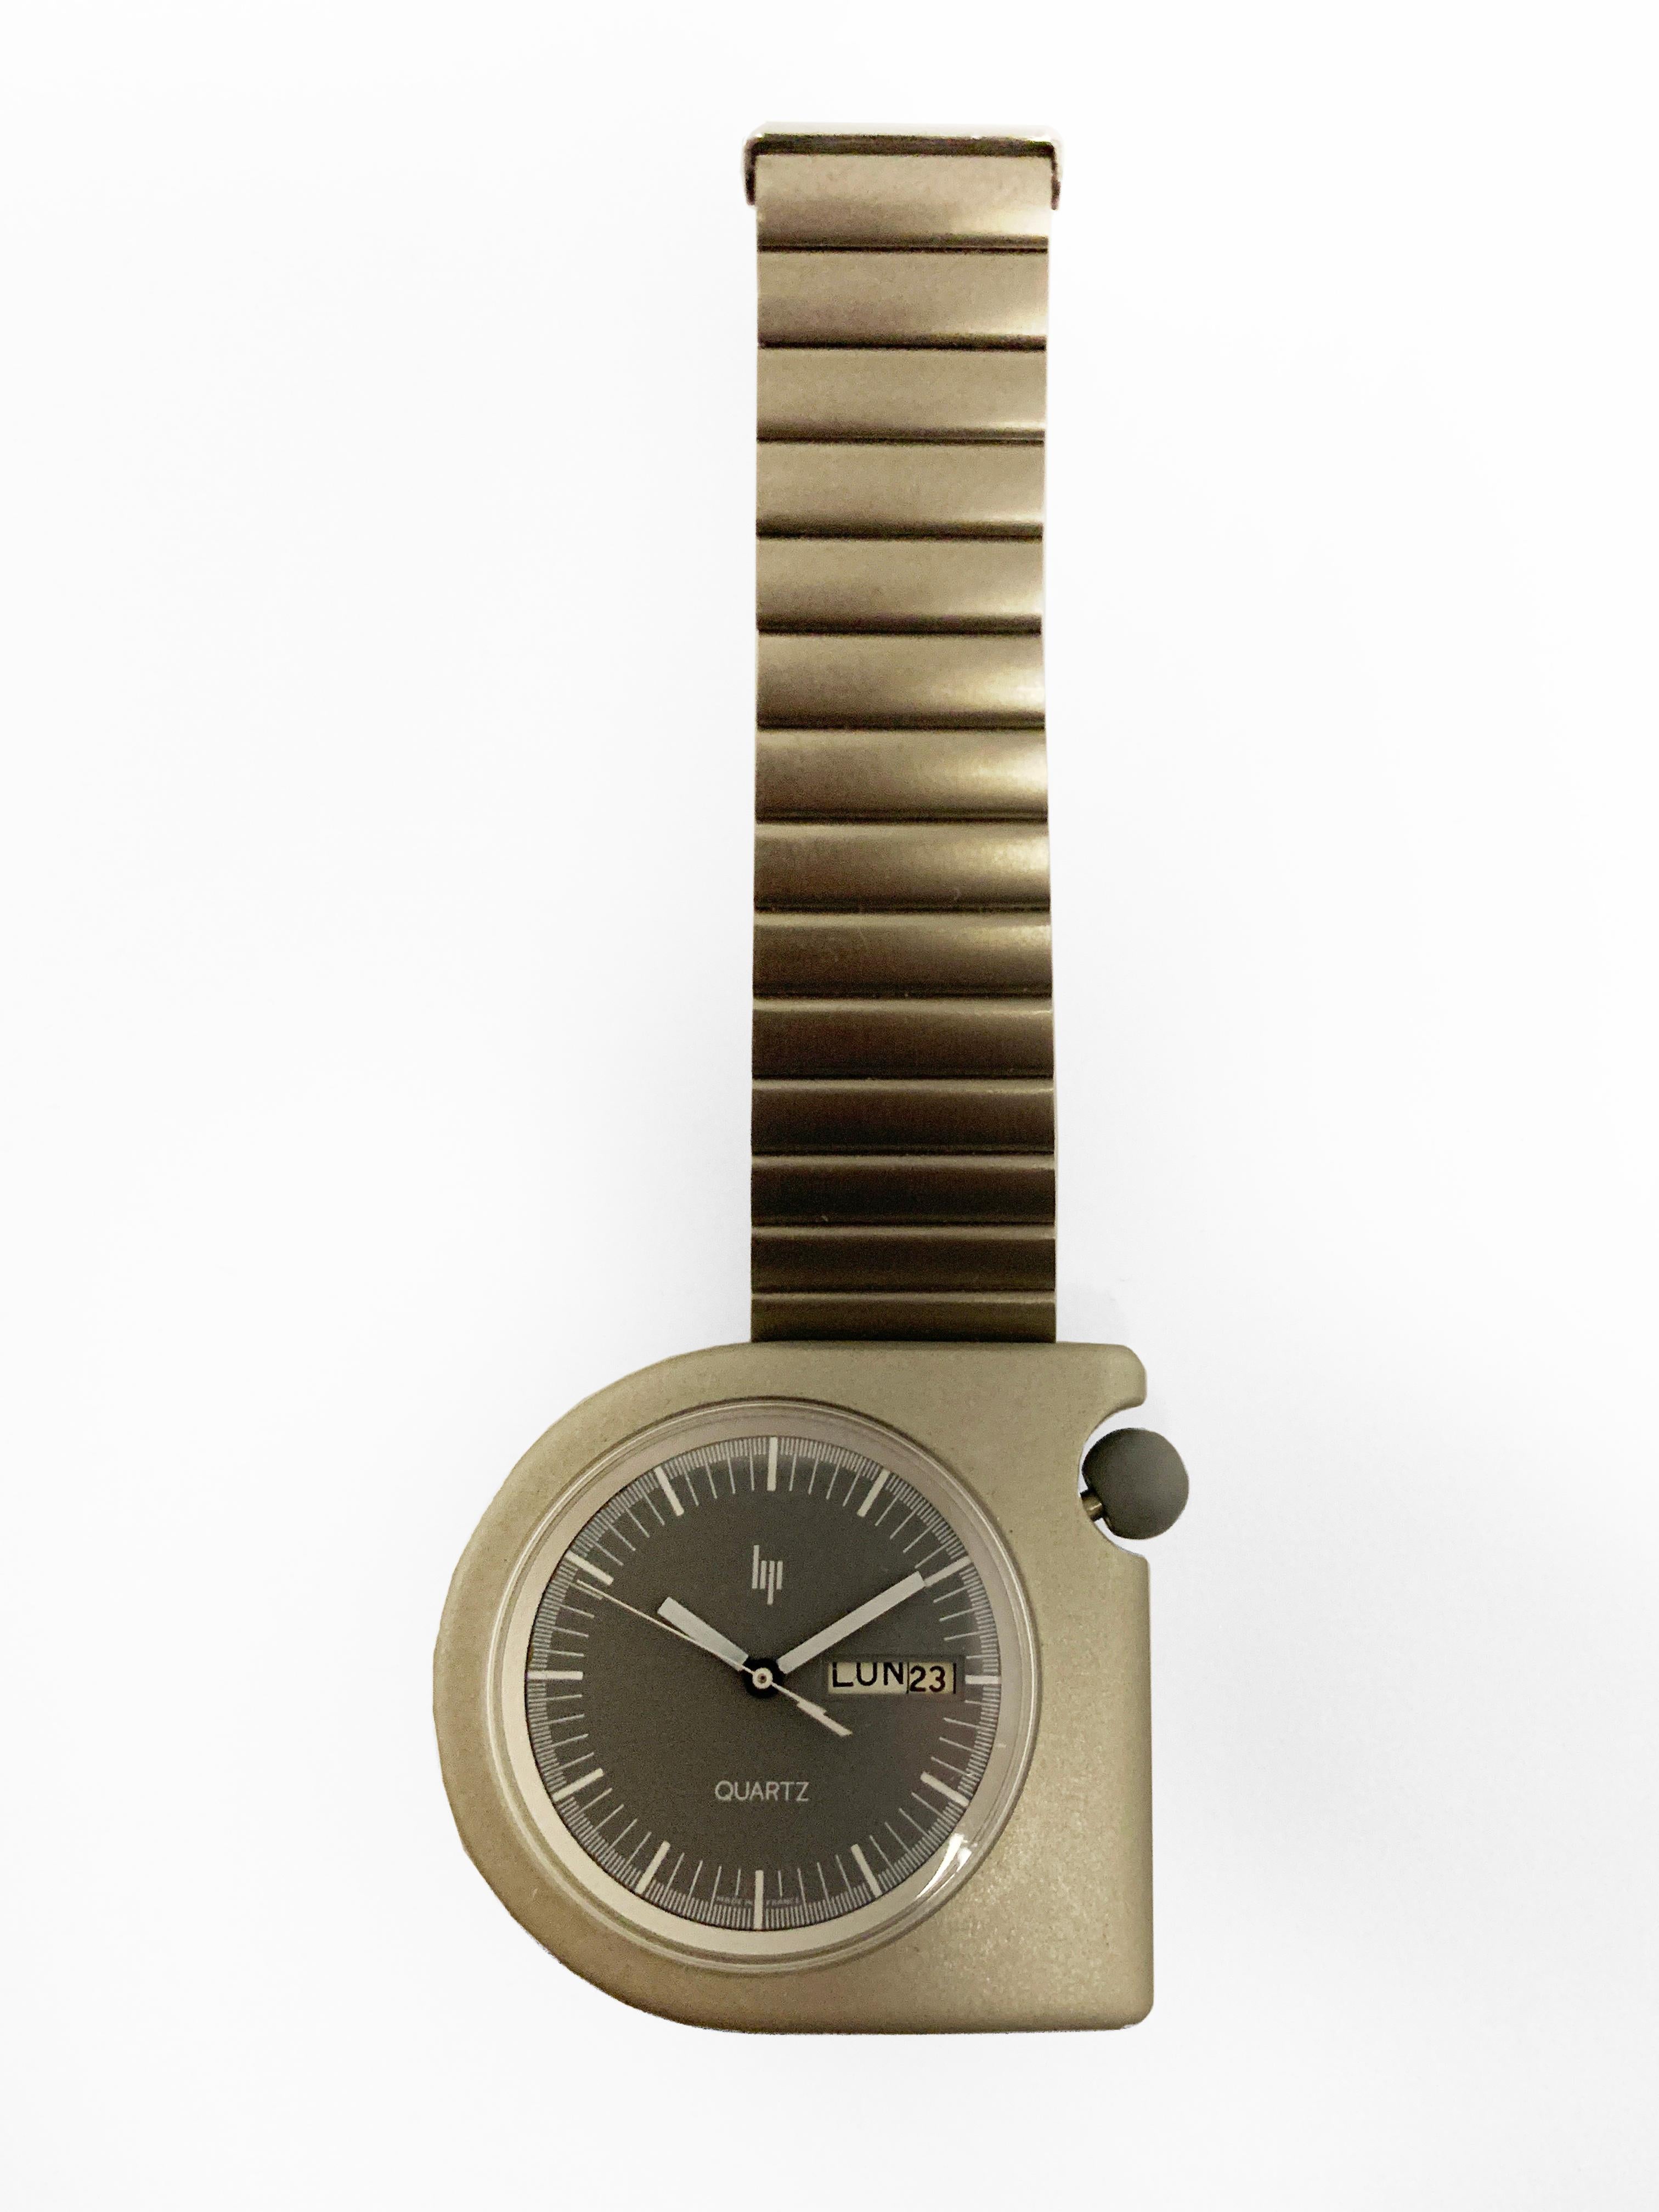 Lip
Roger Tallon
Around 1980
Aluminium case
steel dial
Quartz movement
Diameter: 43mm
Steel bracelet
new watch in stock
perfect condition
690 euros